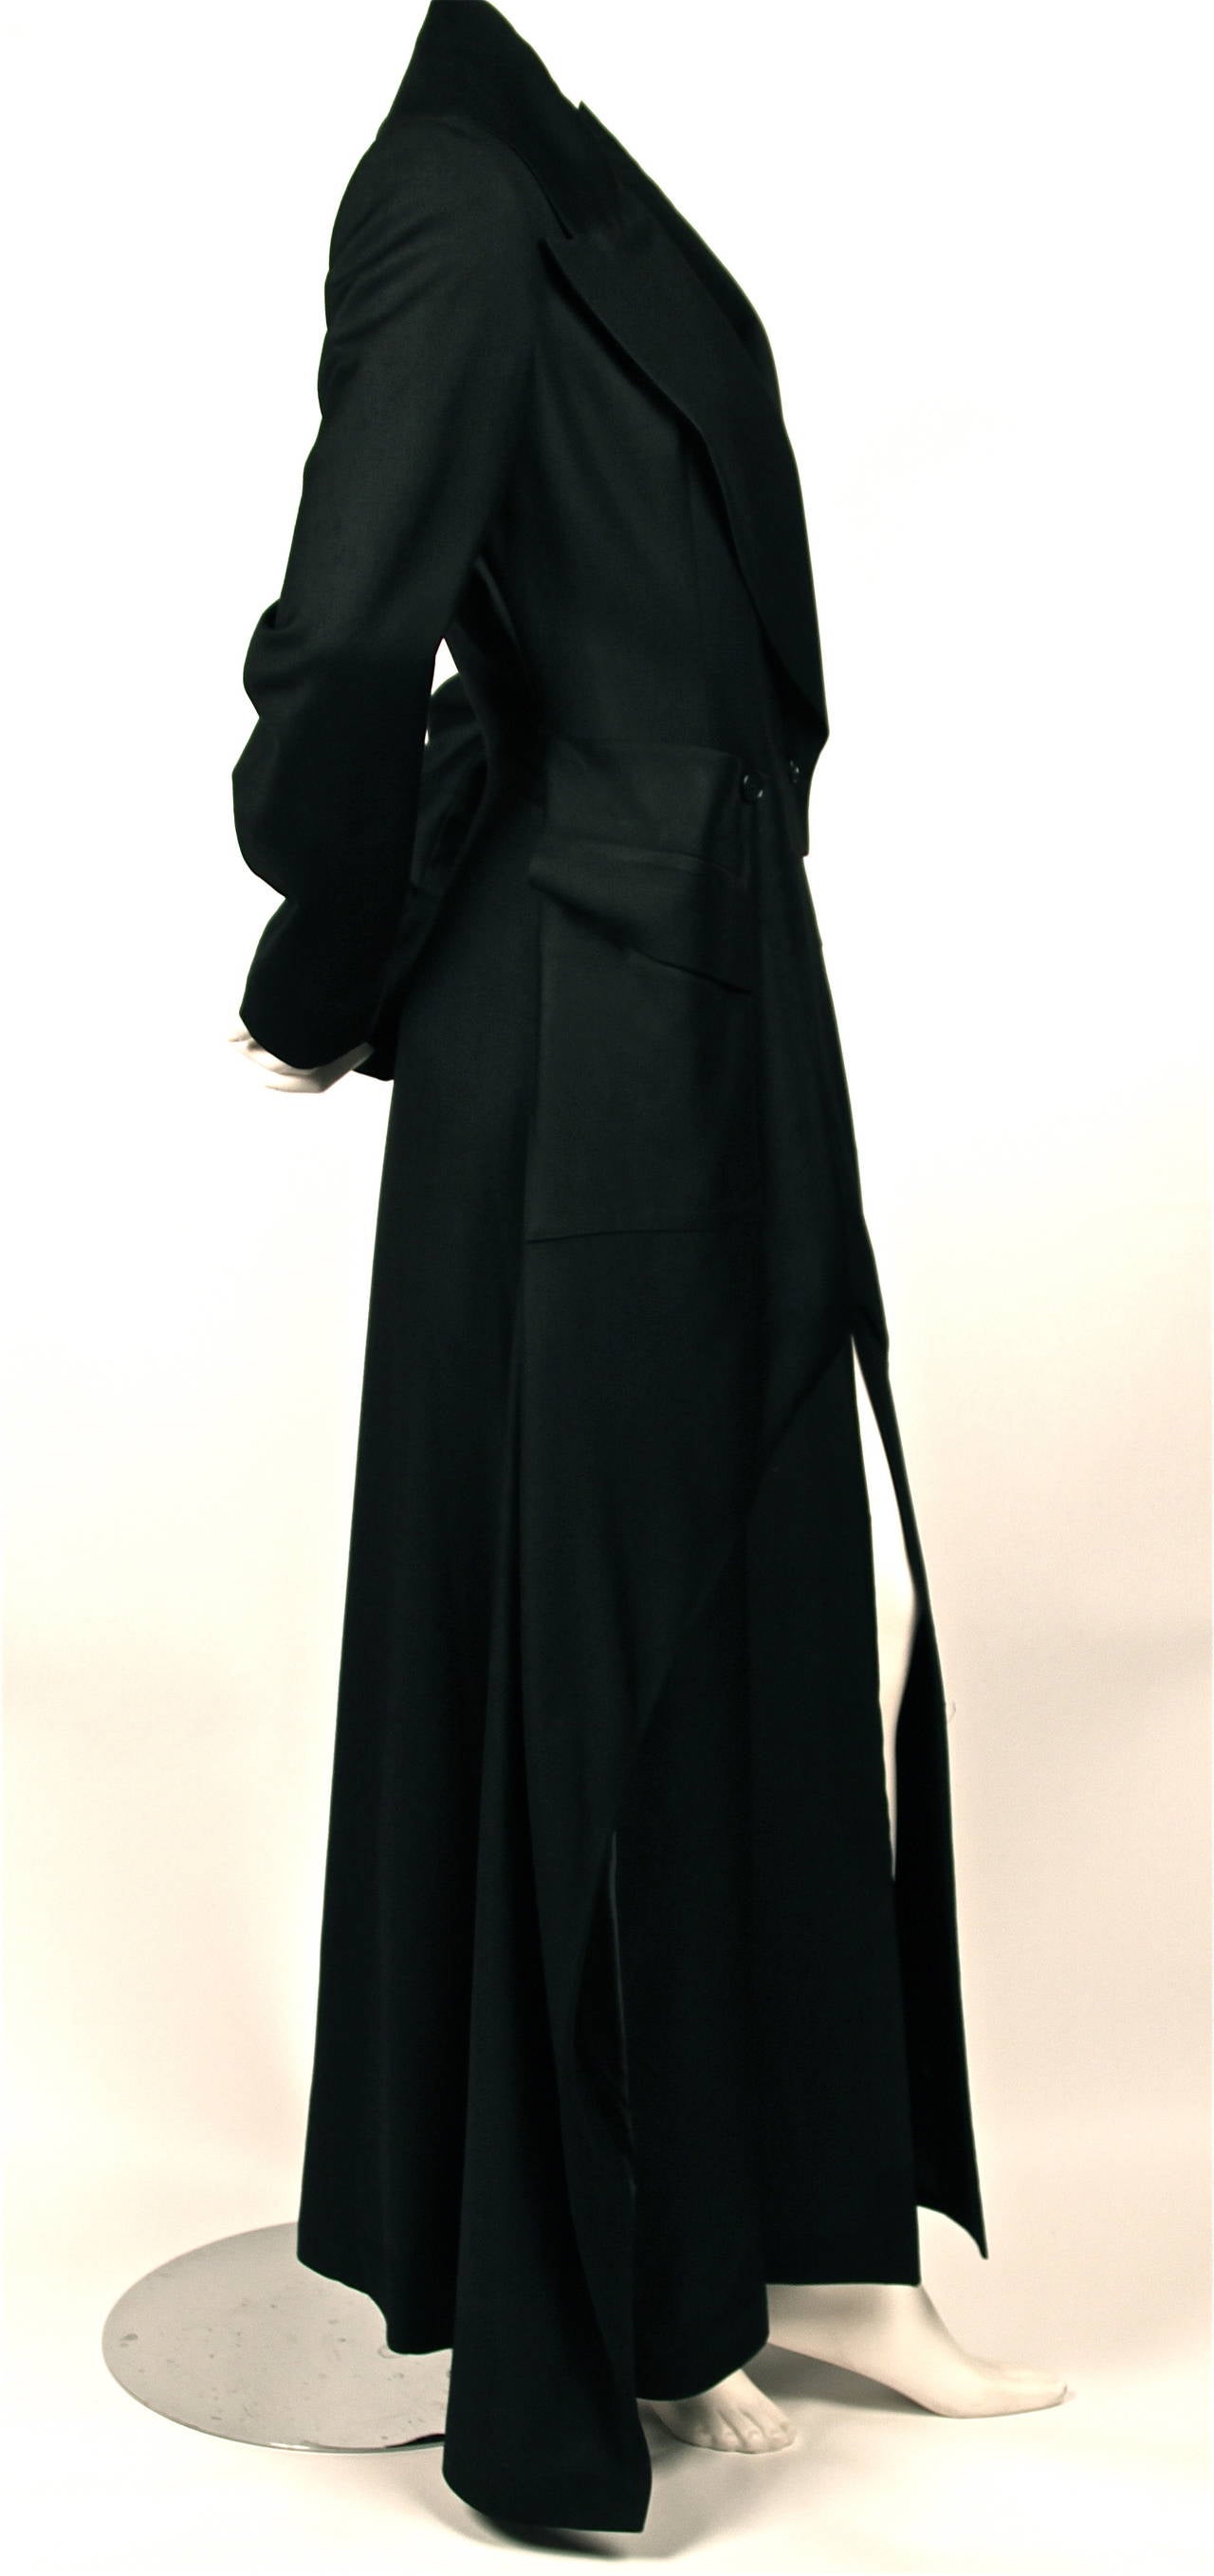 Women's rare 1990's ALEXANDER MCQUEEN black floor length evening coat with draped sides